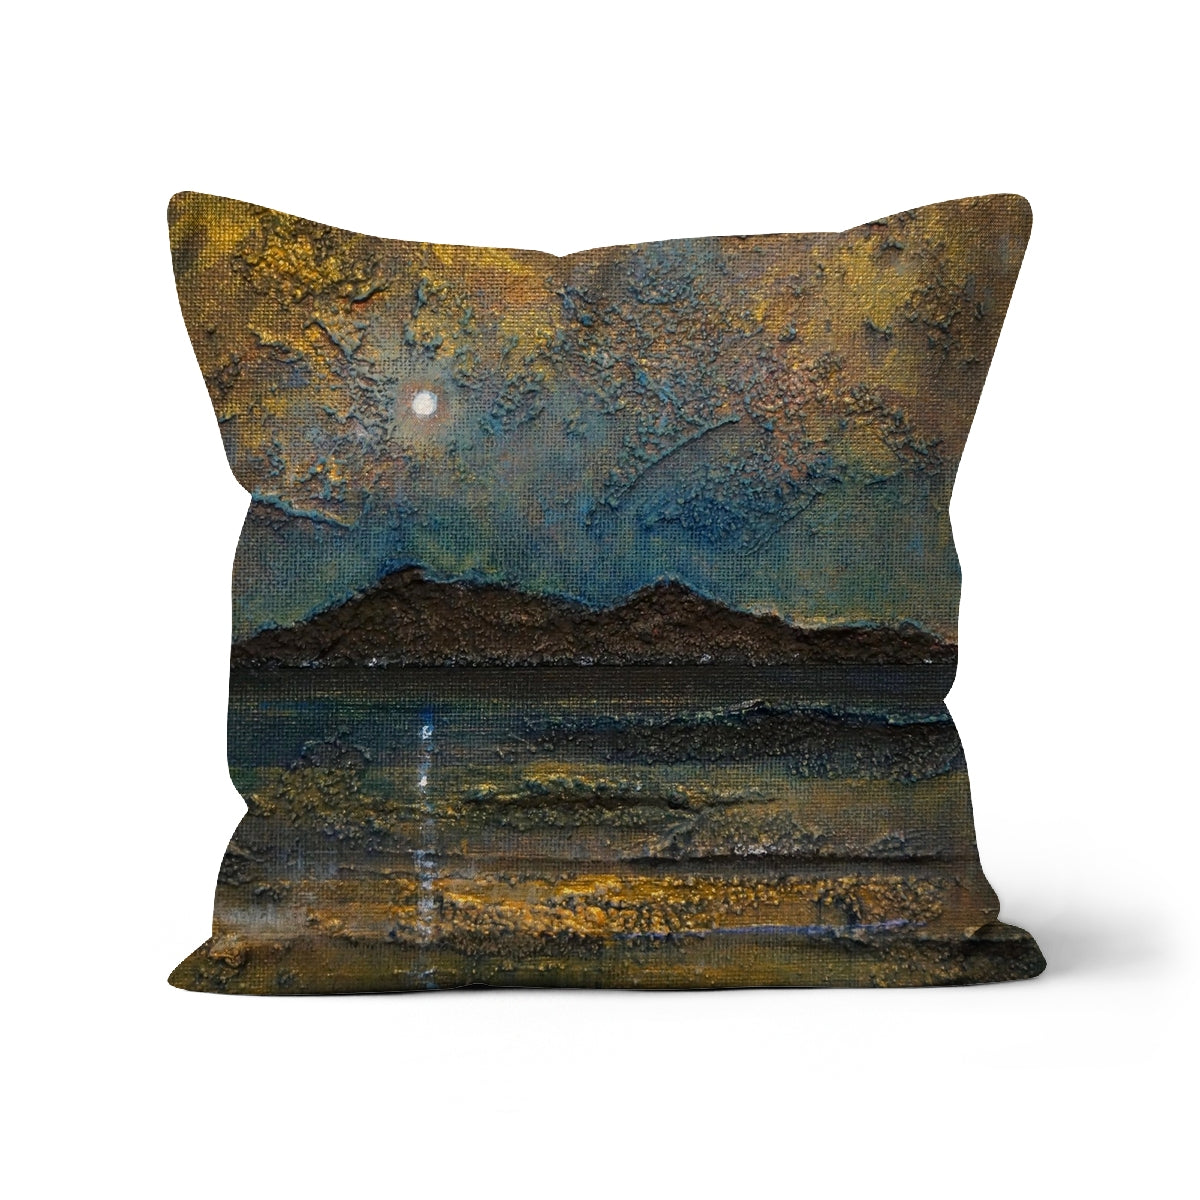 Arran Moonlight Art Gifts Cushion-Cushions-Arran Art Gallery-Canvas-12"x12"-Paintings, Prints, Homeware, Art Gifts From Scotland By Scottish Artist Kevin Hunter